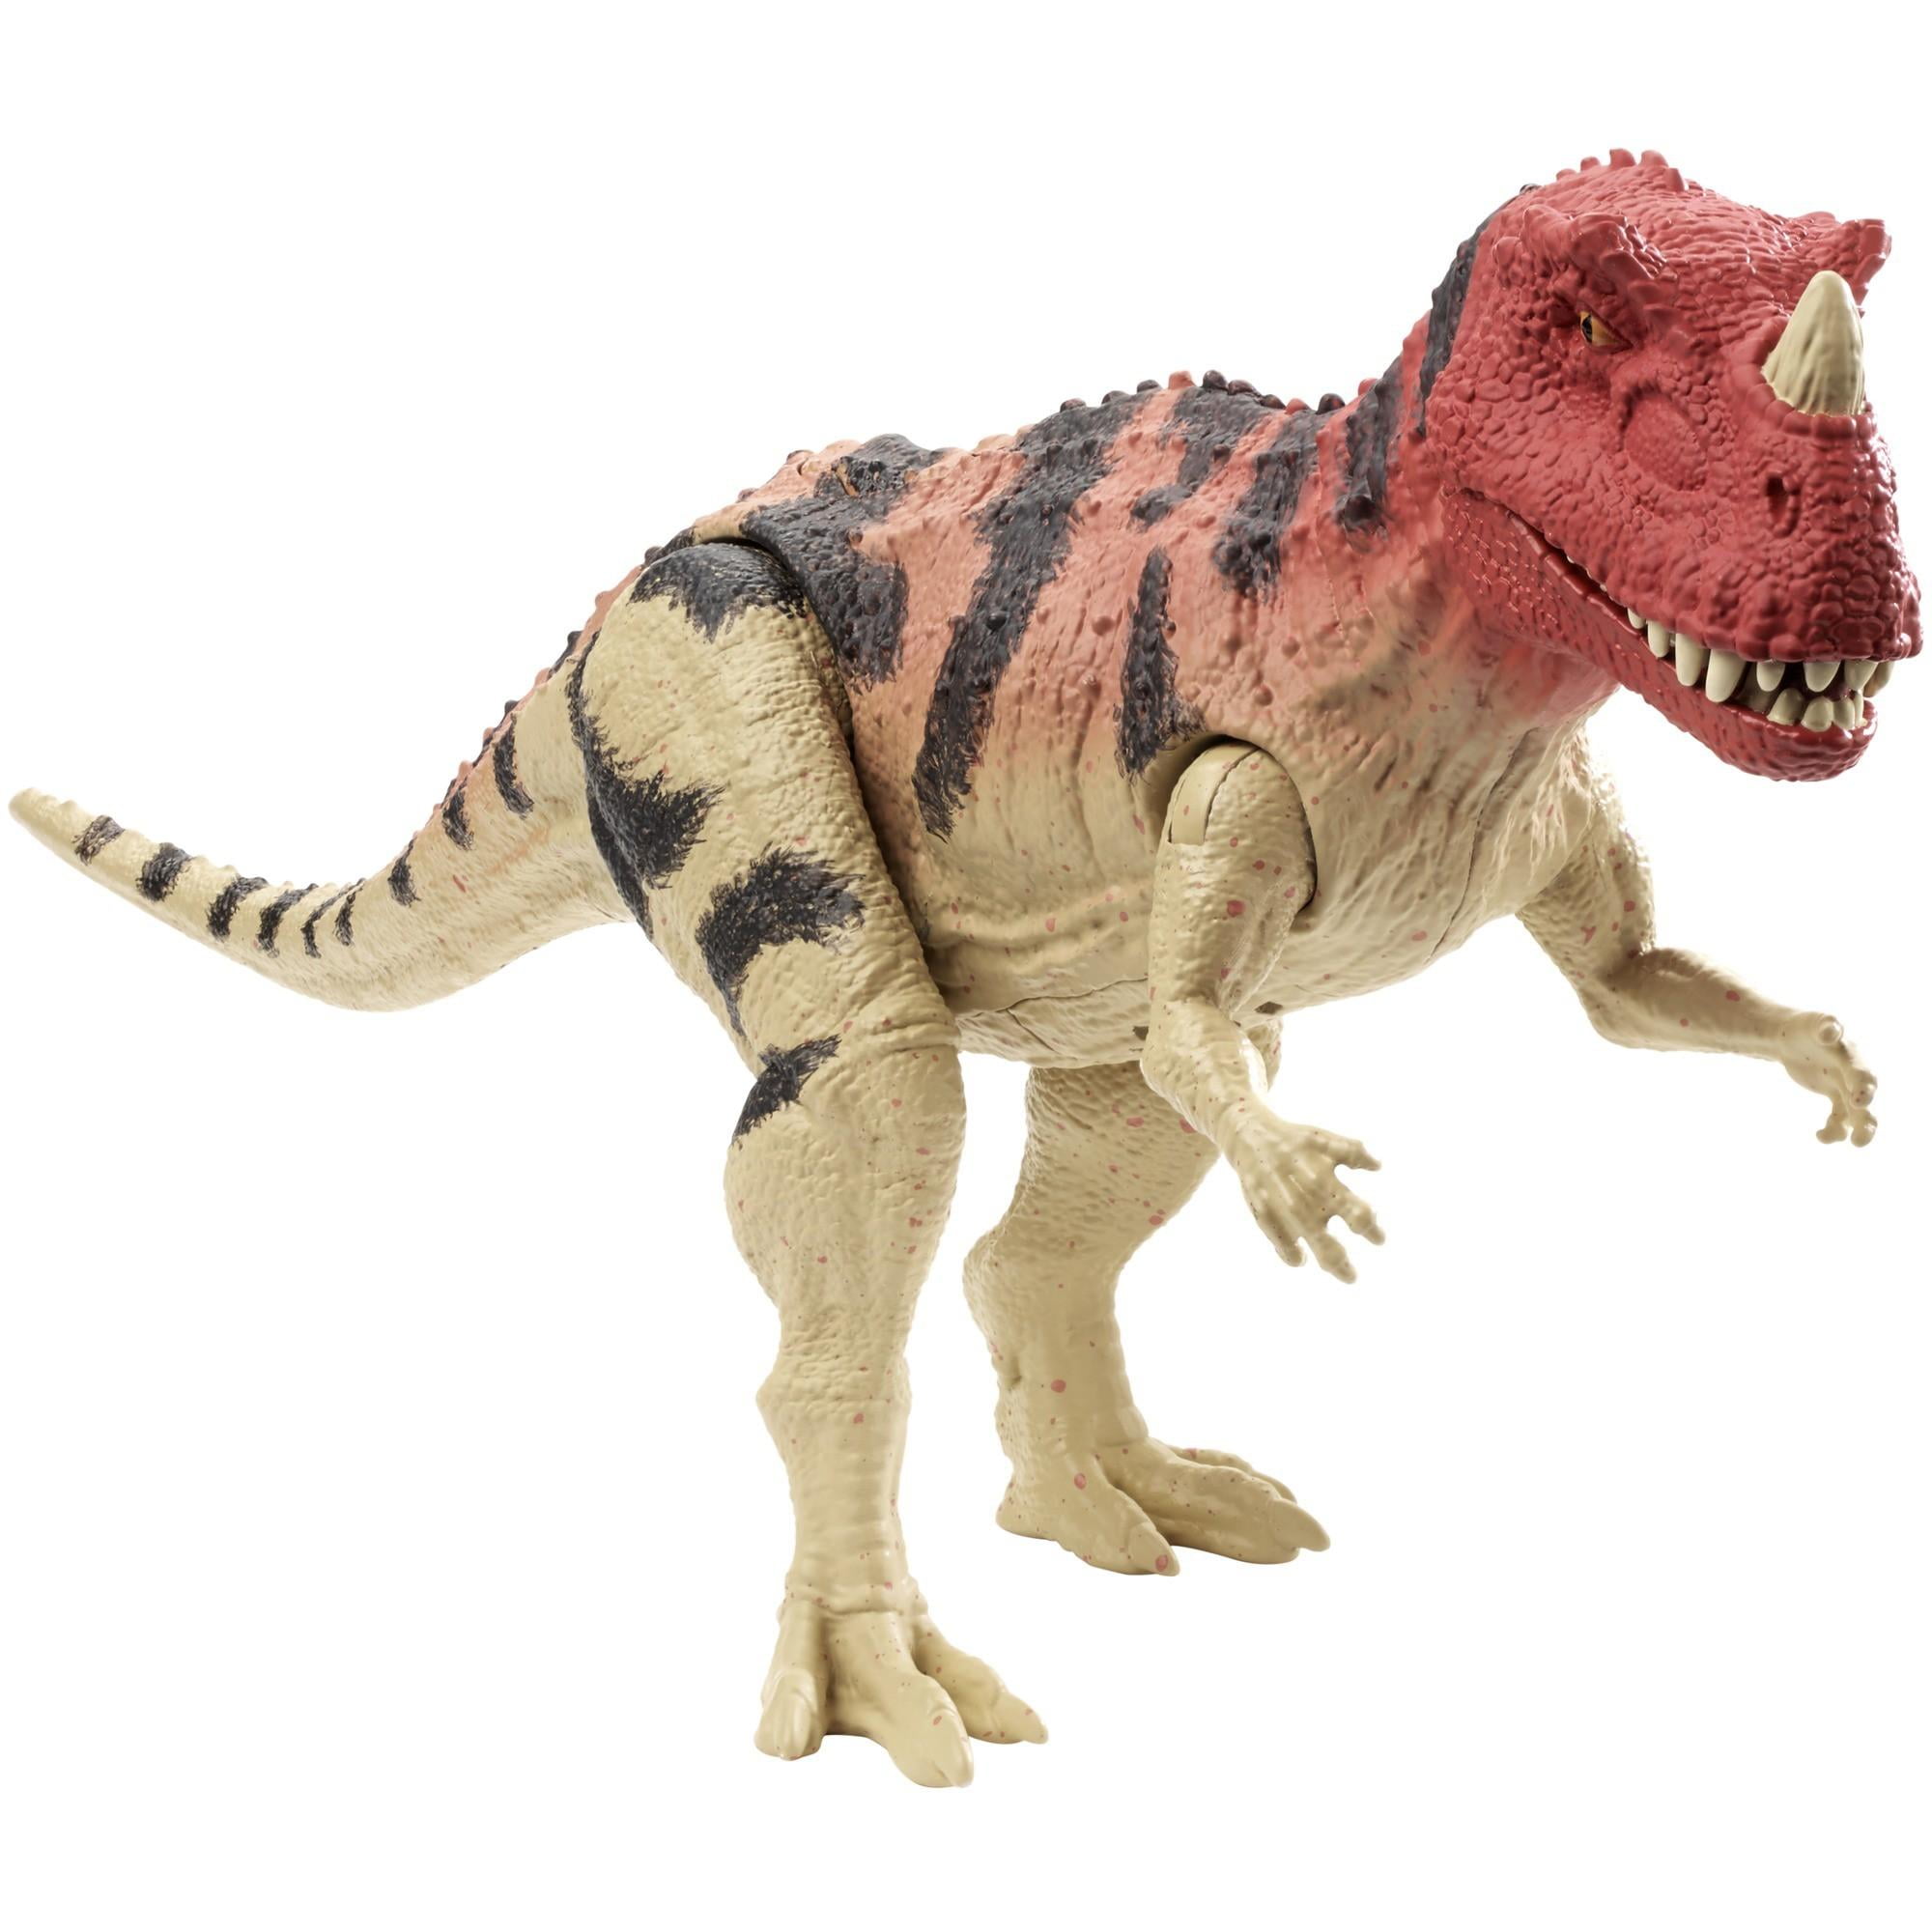 jurassic world roarivores dinosaur action figures